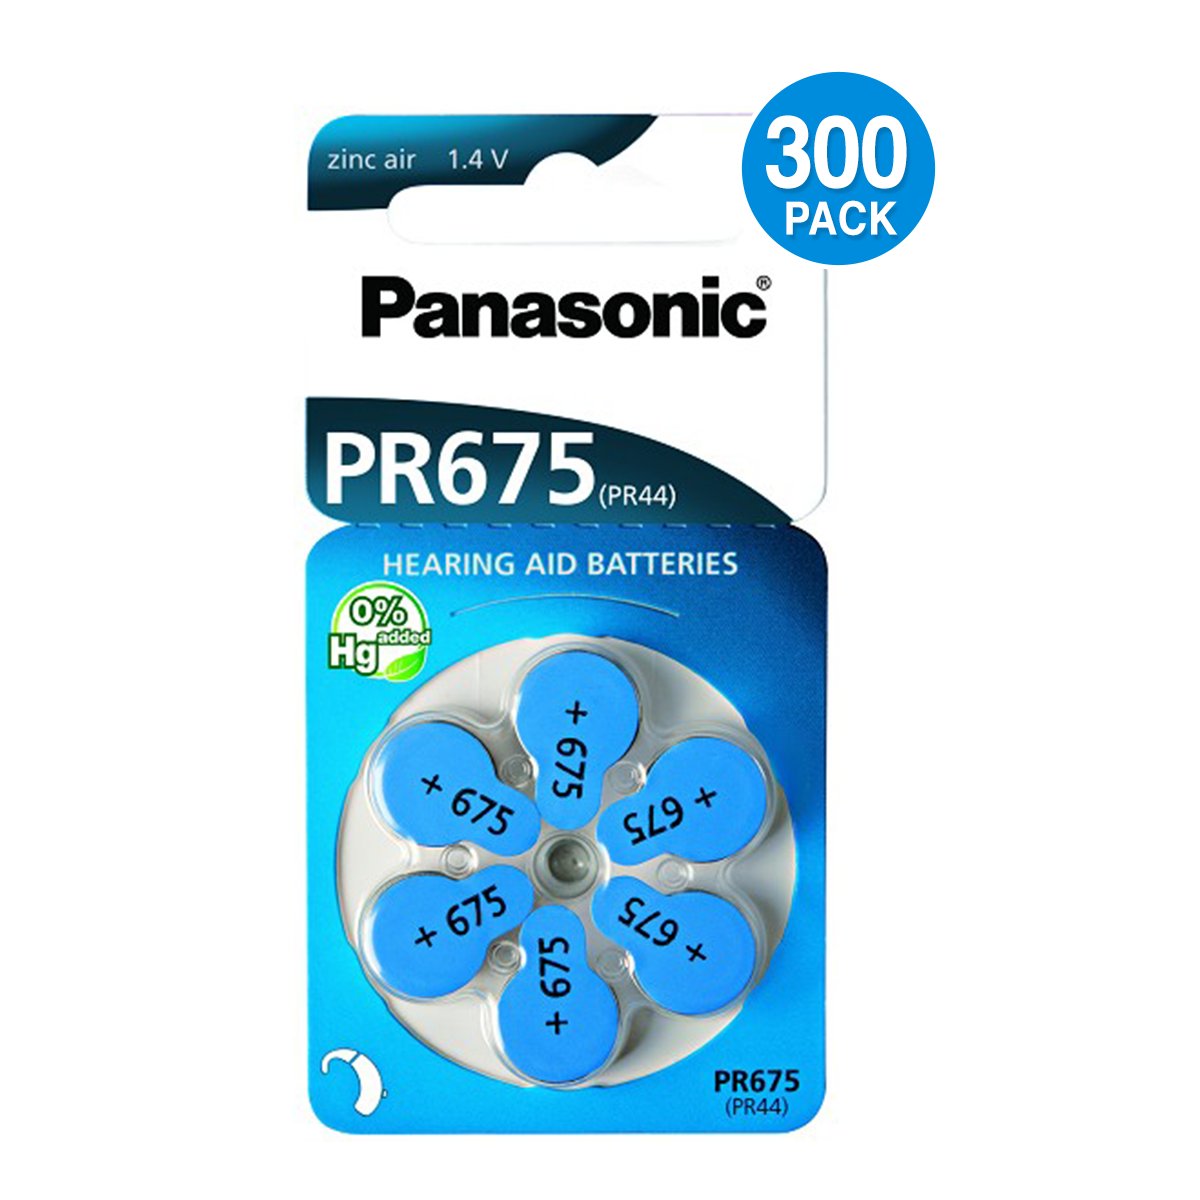 tvetydig Fejlfri Fremmedgøre Panasonic Size 675 Hearing Aid Battery (300 pcs.)